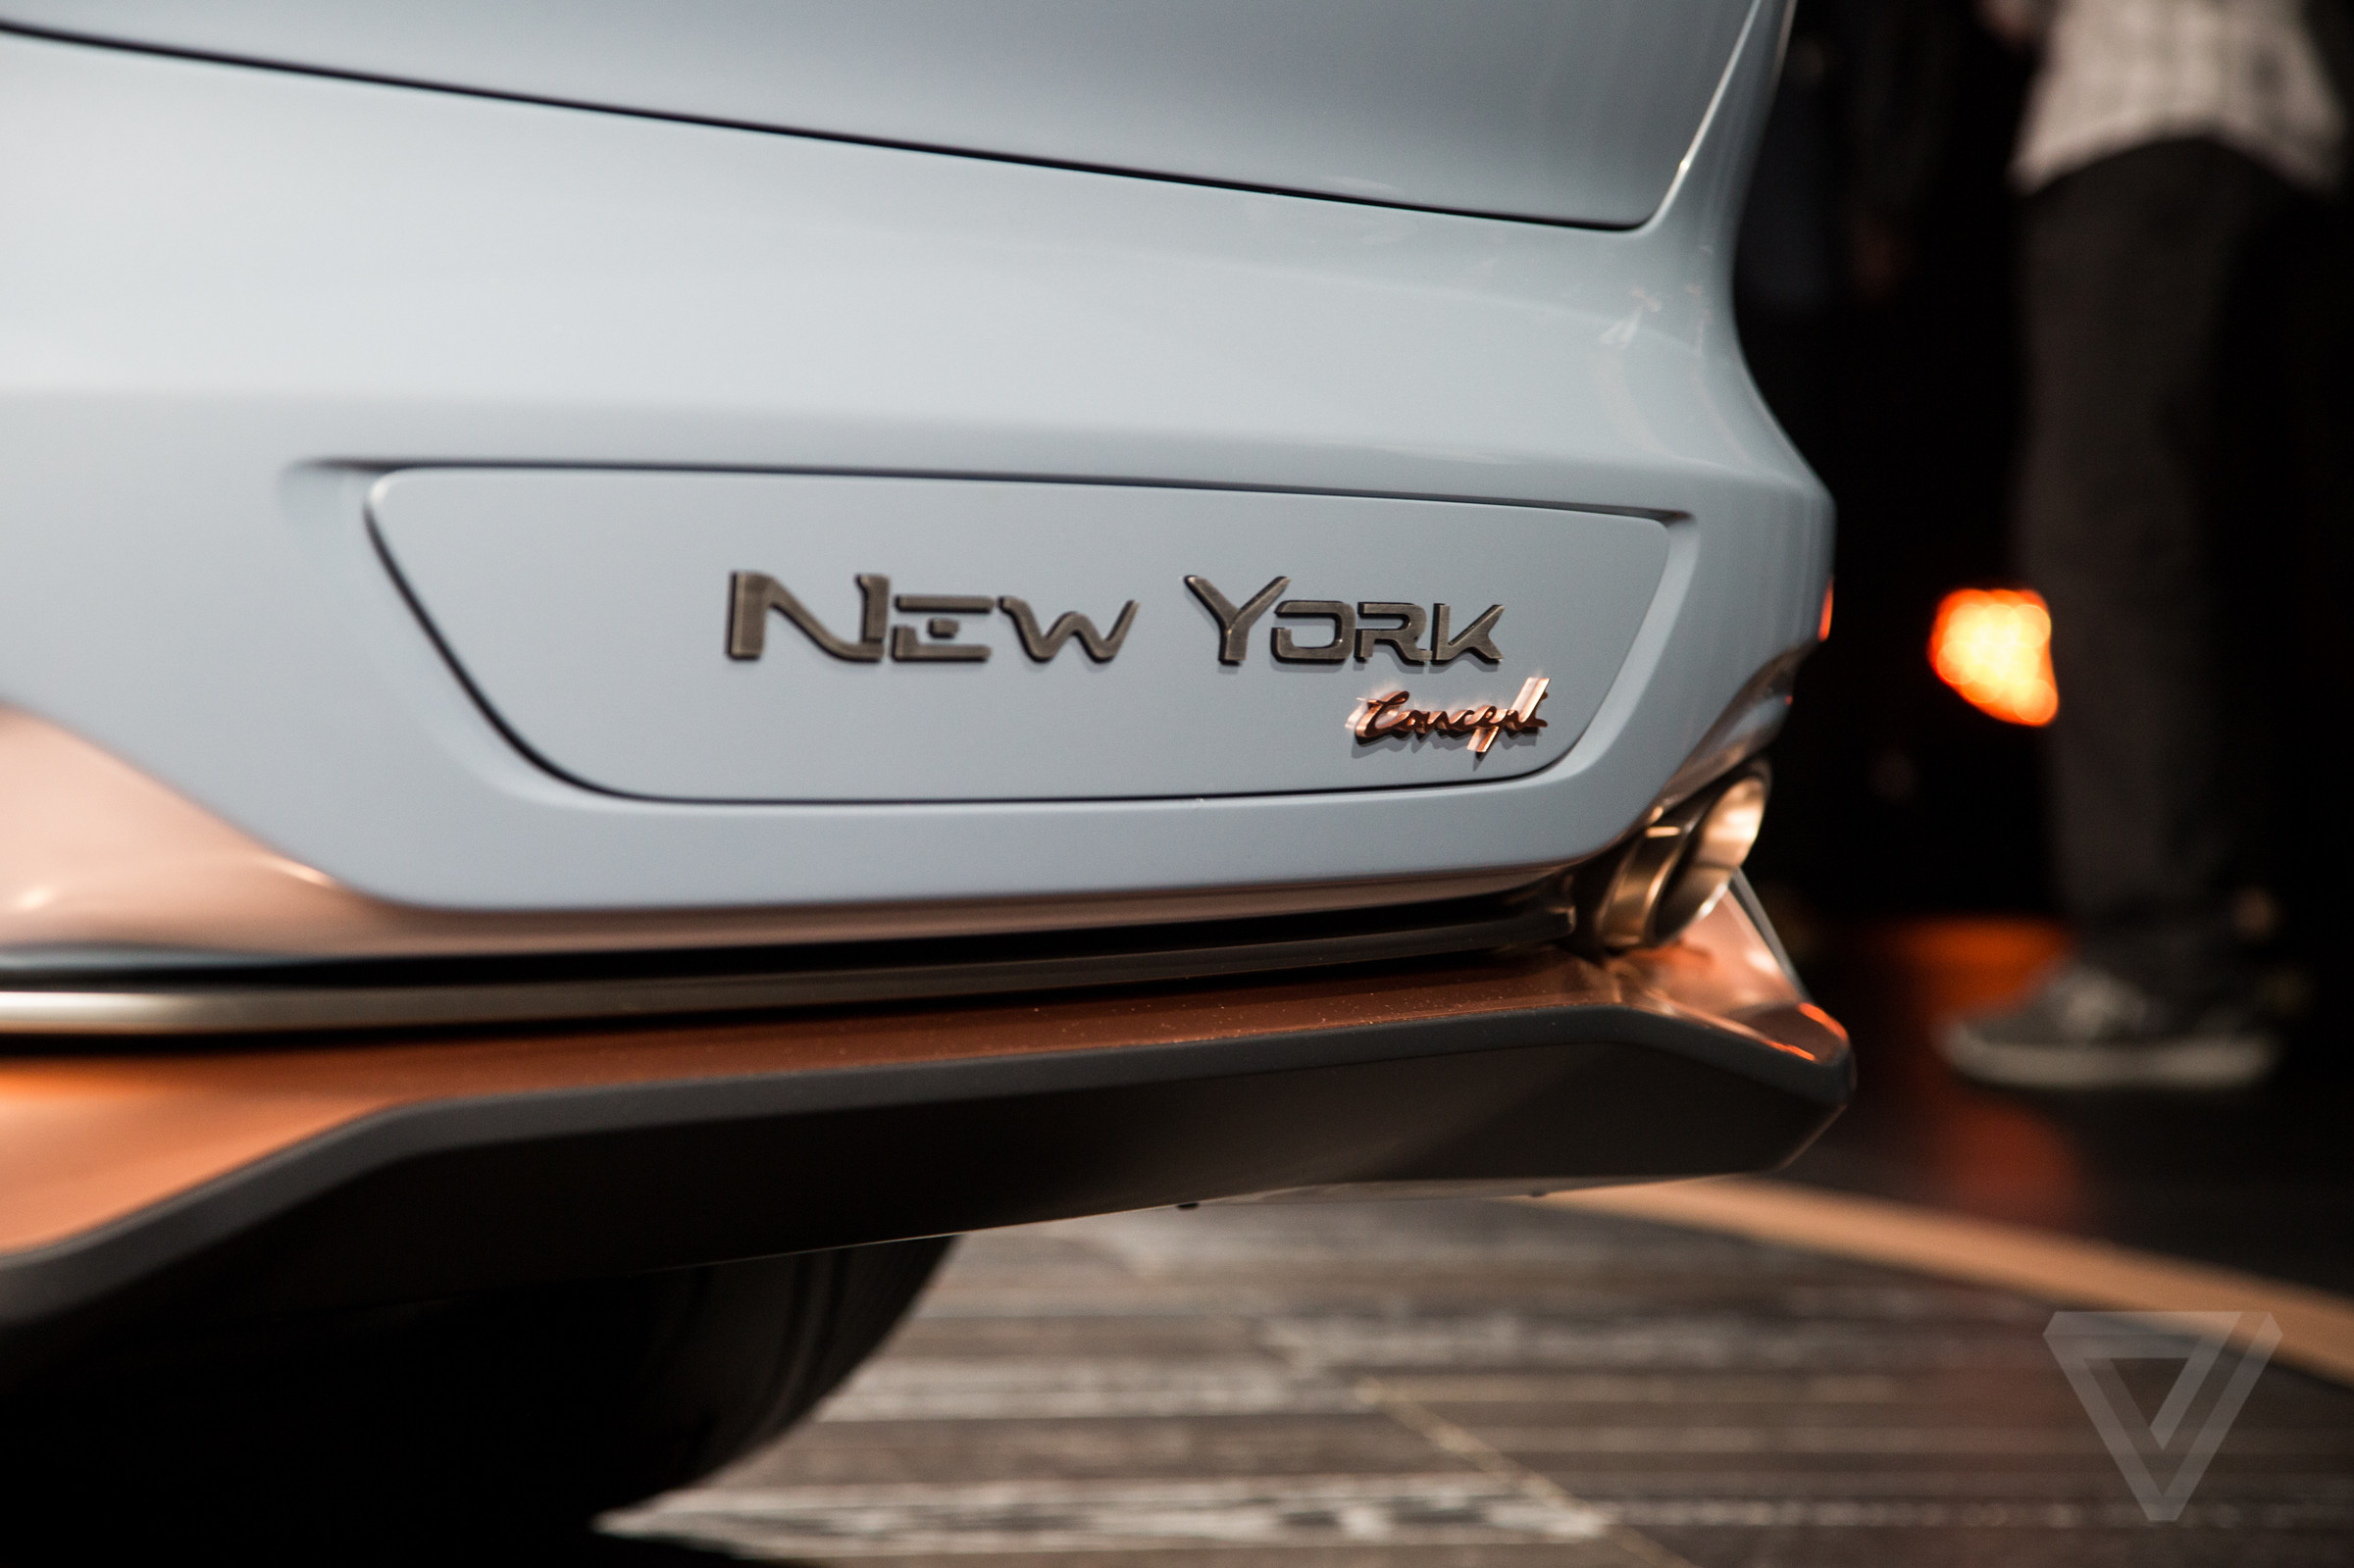 Genesis New York Concept in photos